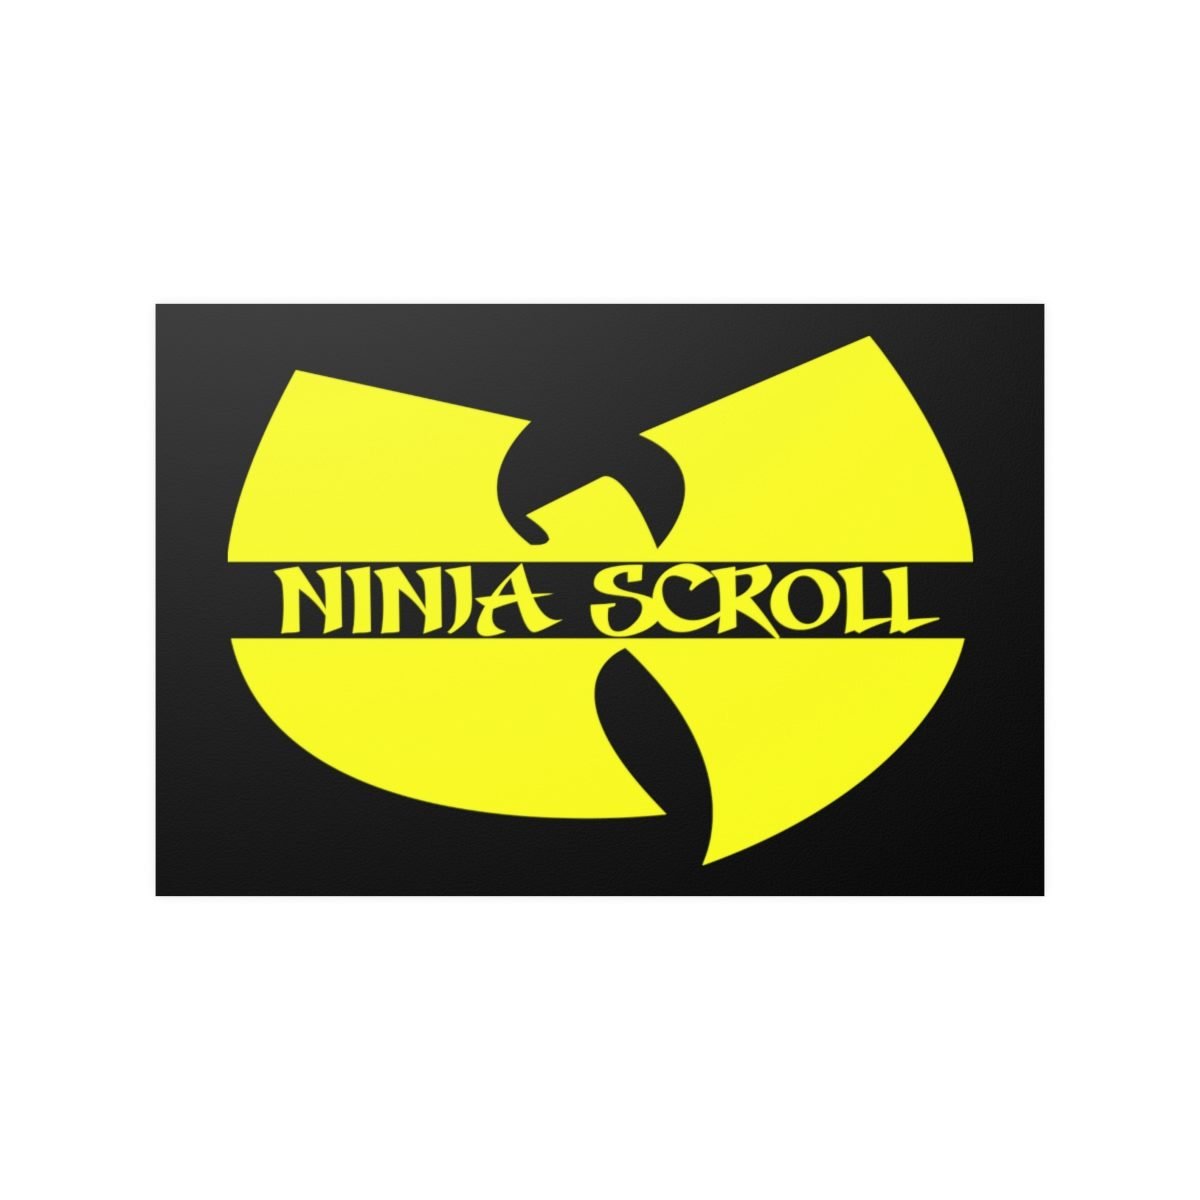 Ninja Scroll – Dove Posters